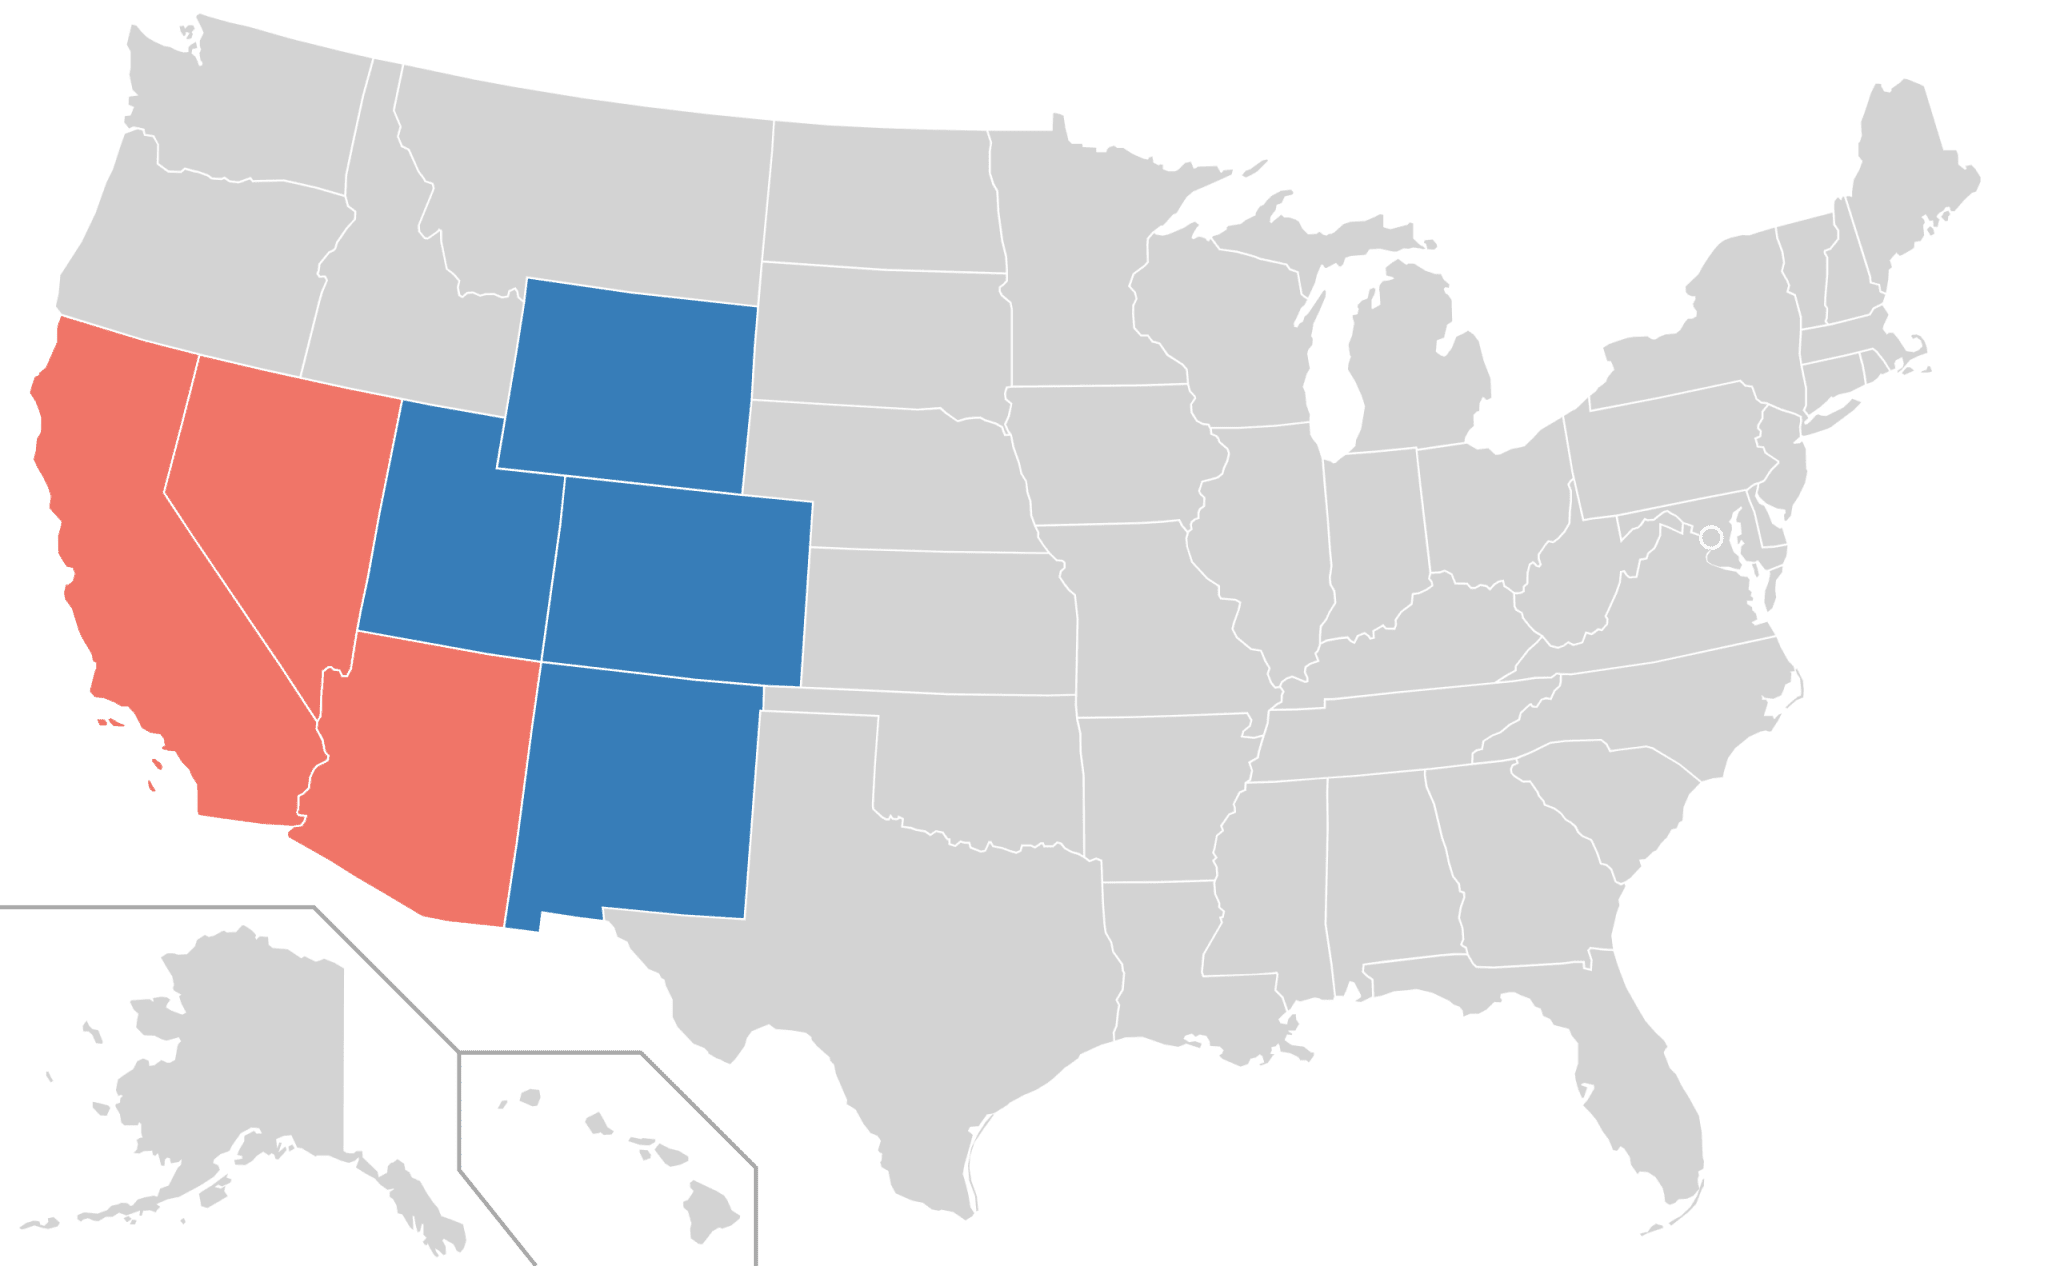 The Colorado River Compact states